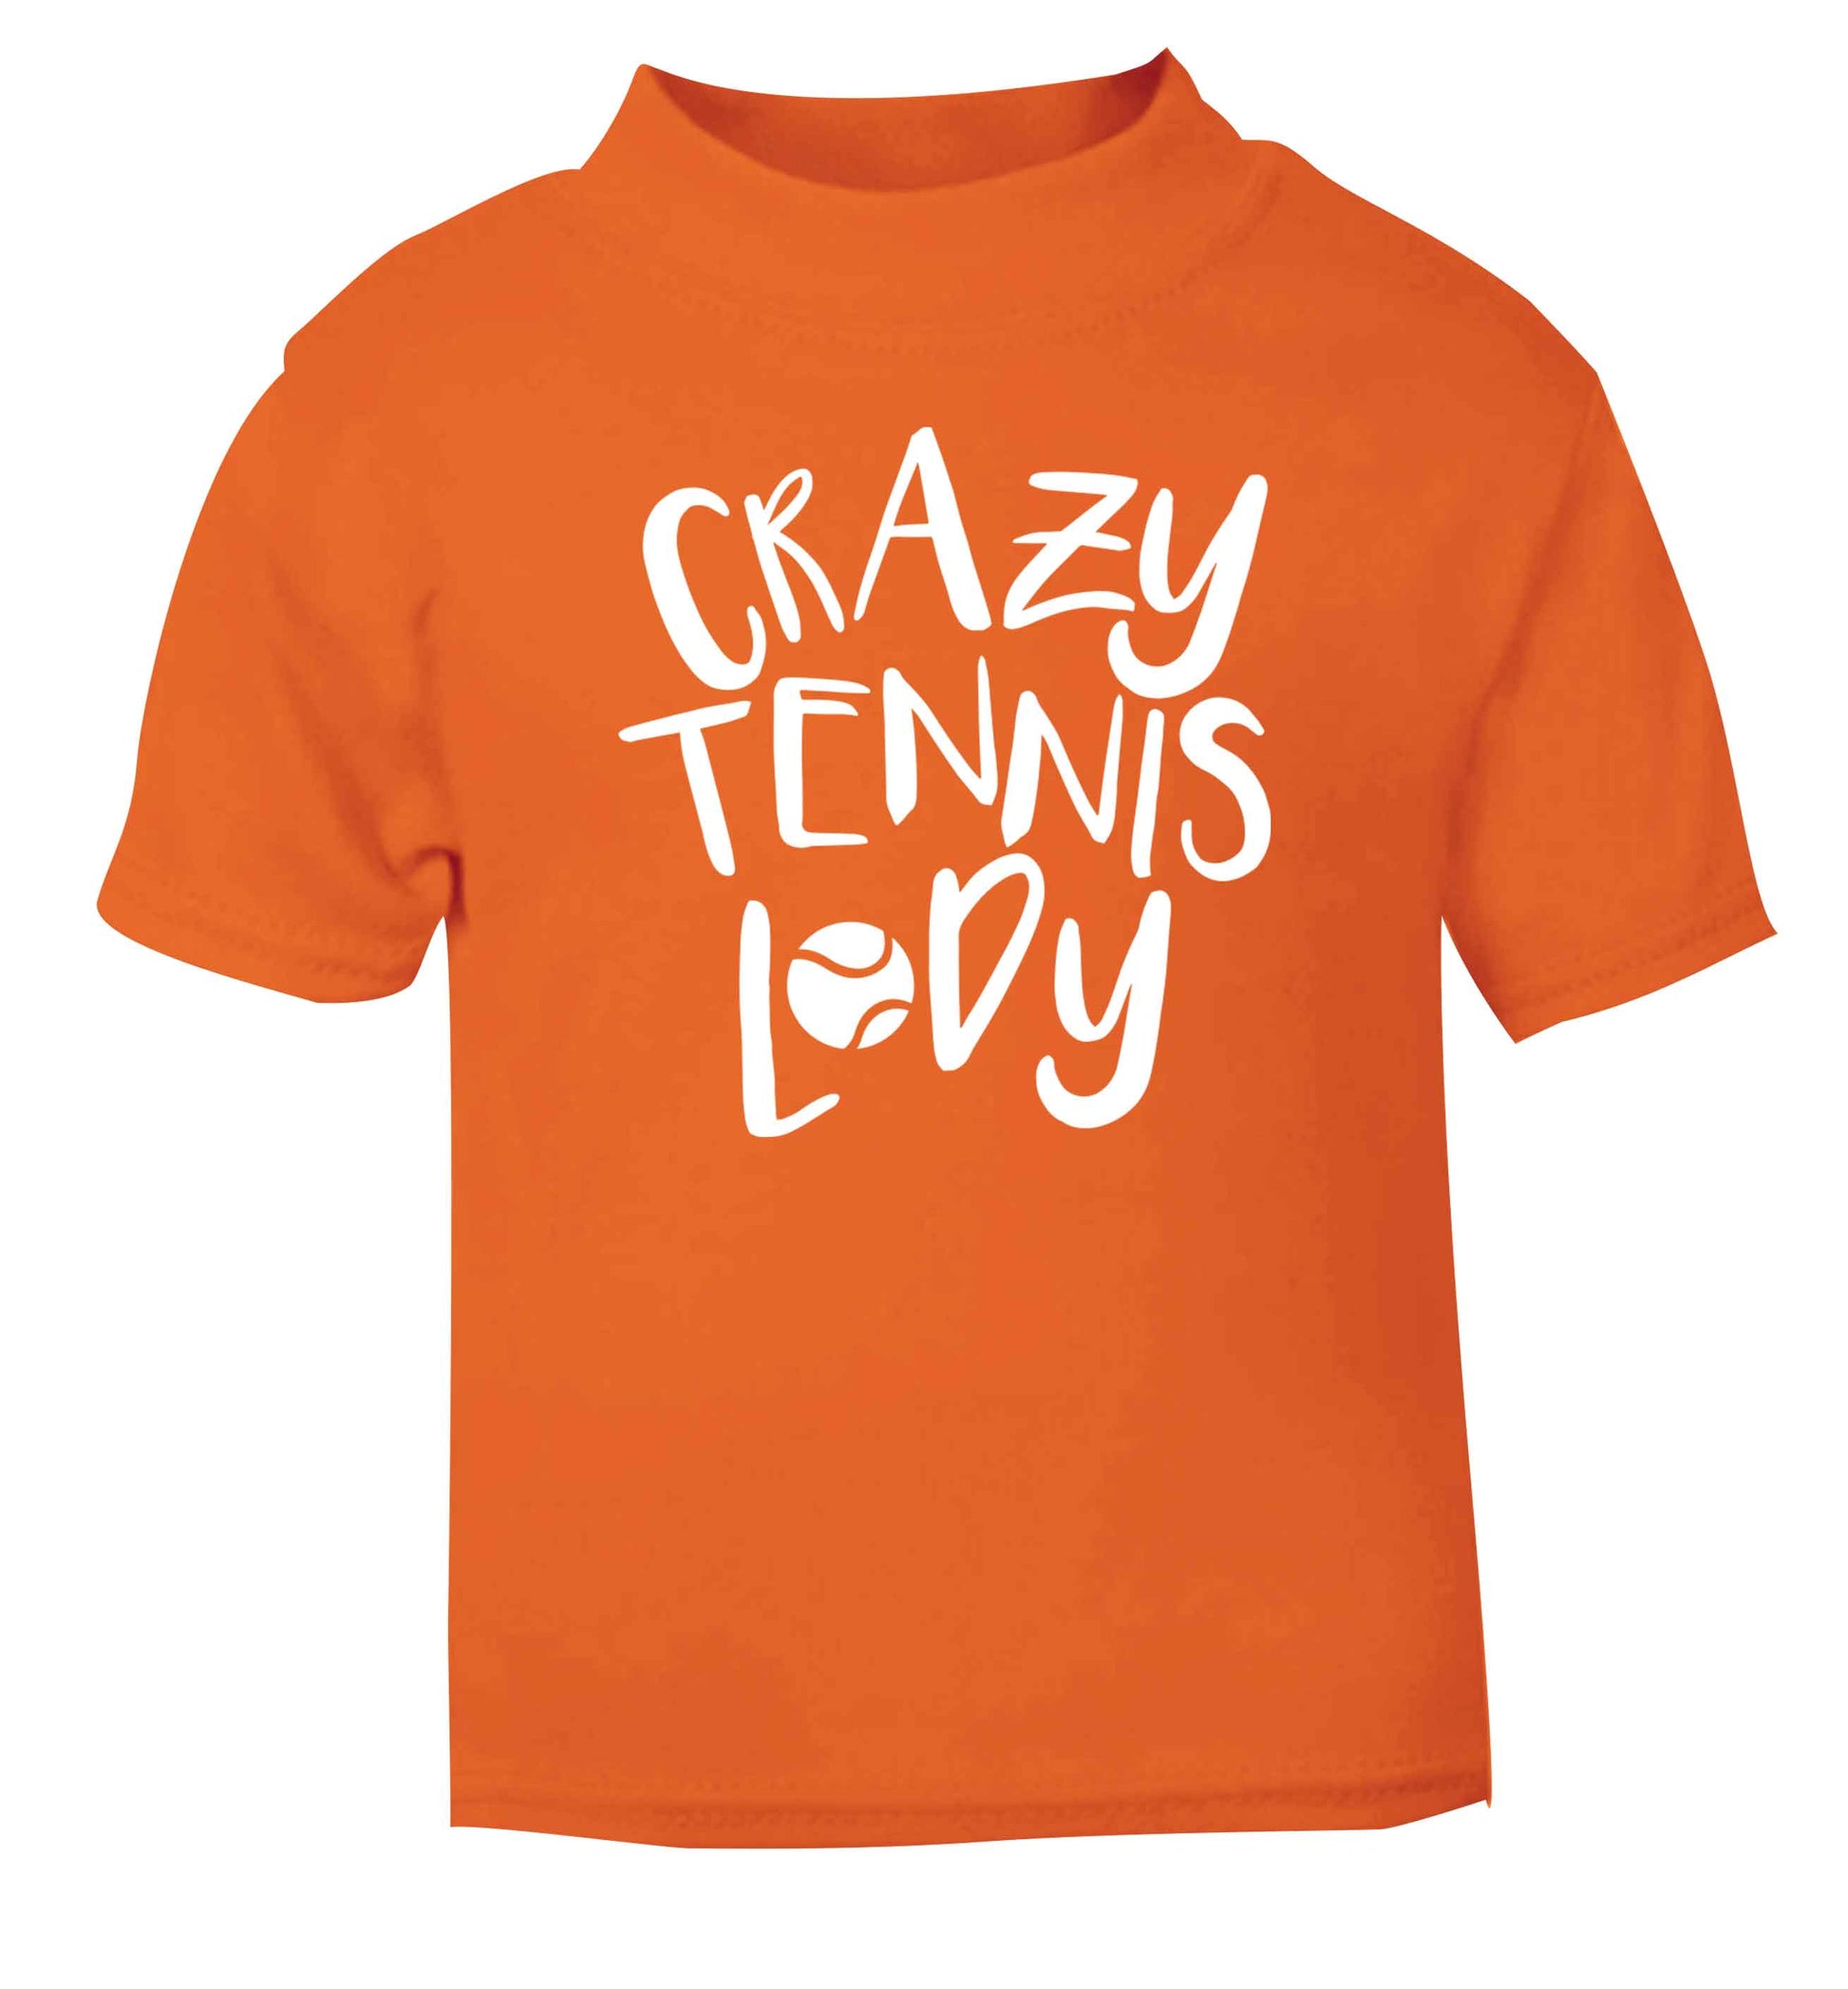 Crazy tennis lady orange Baby Toddler Tshirt 2 Years